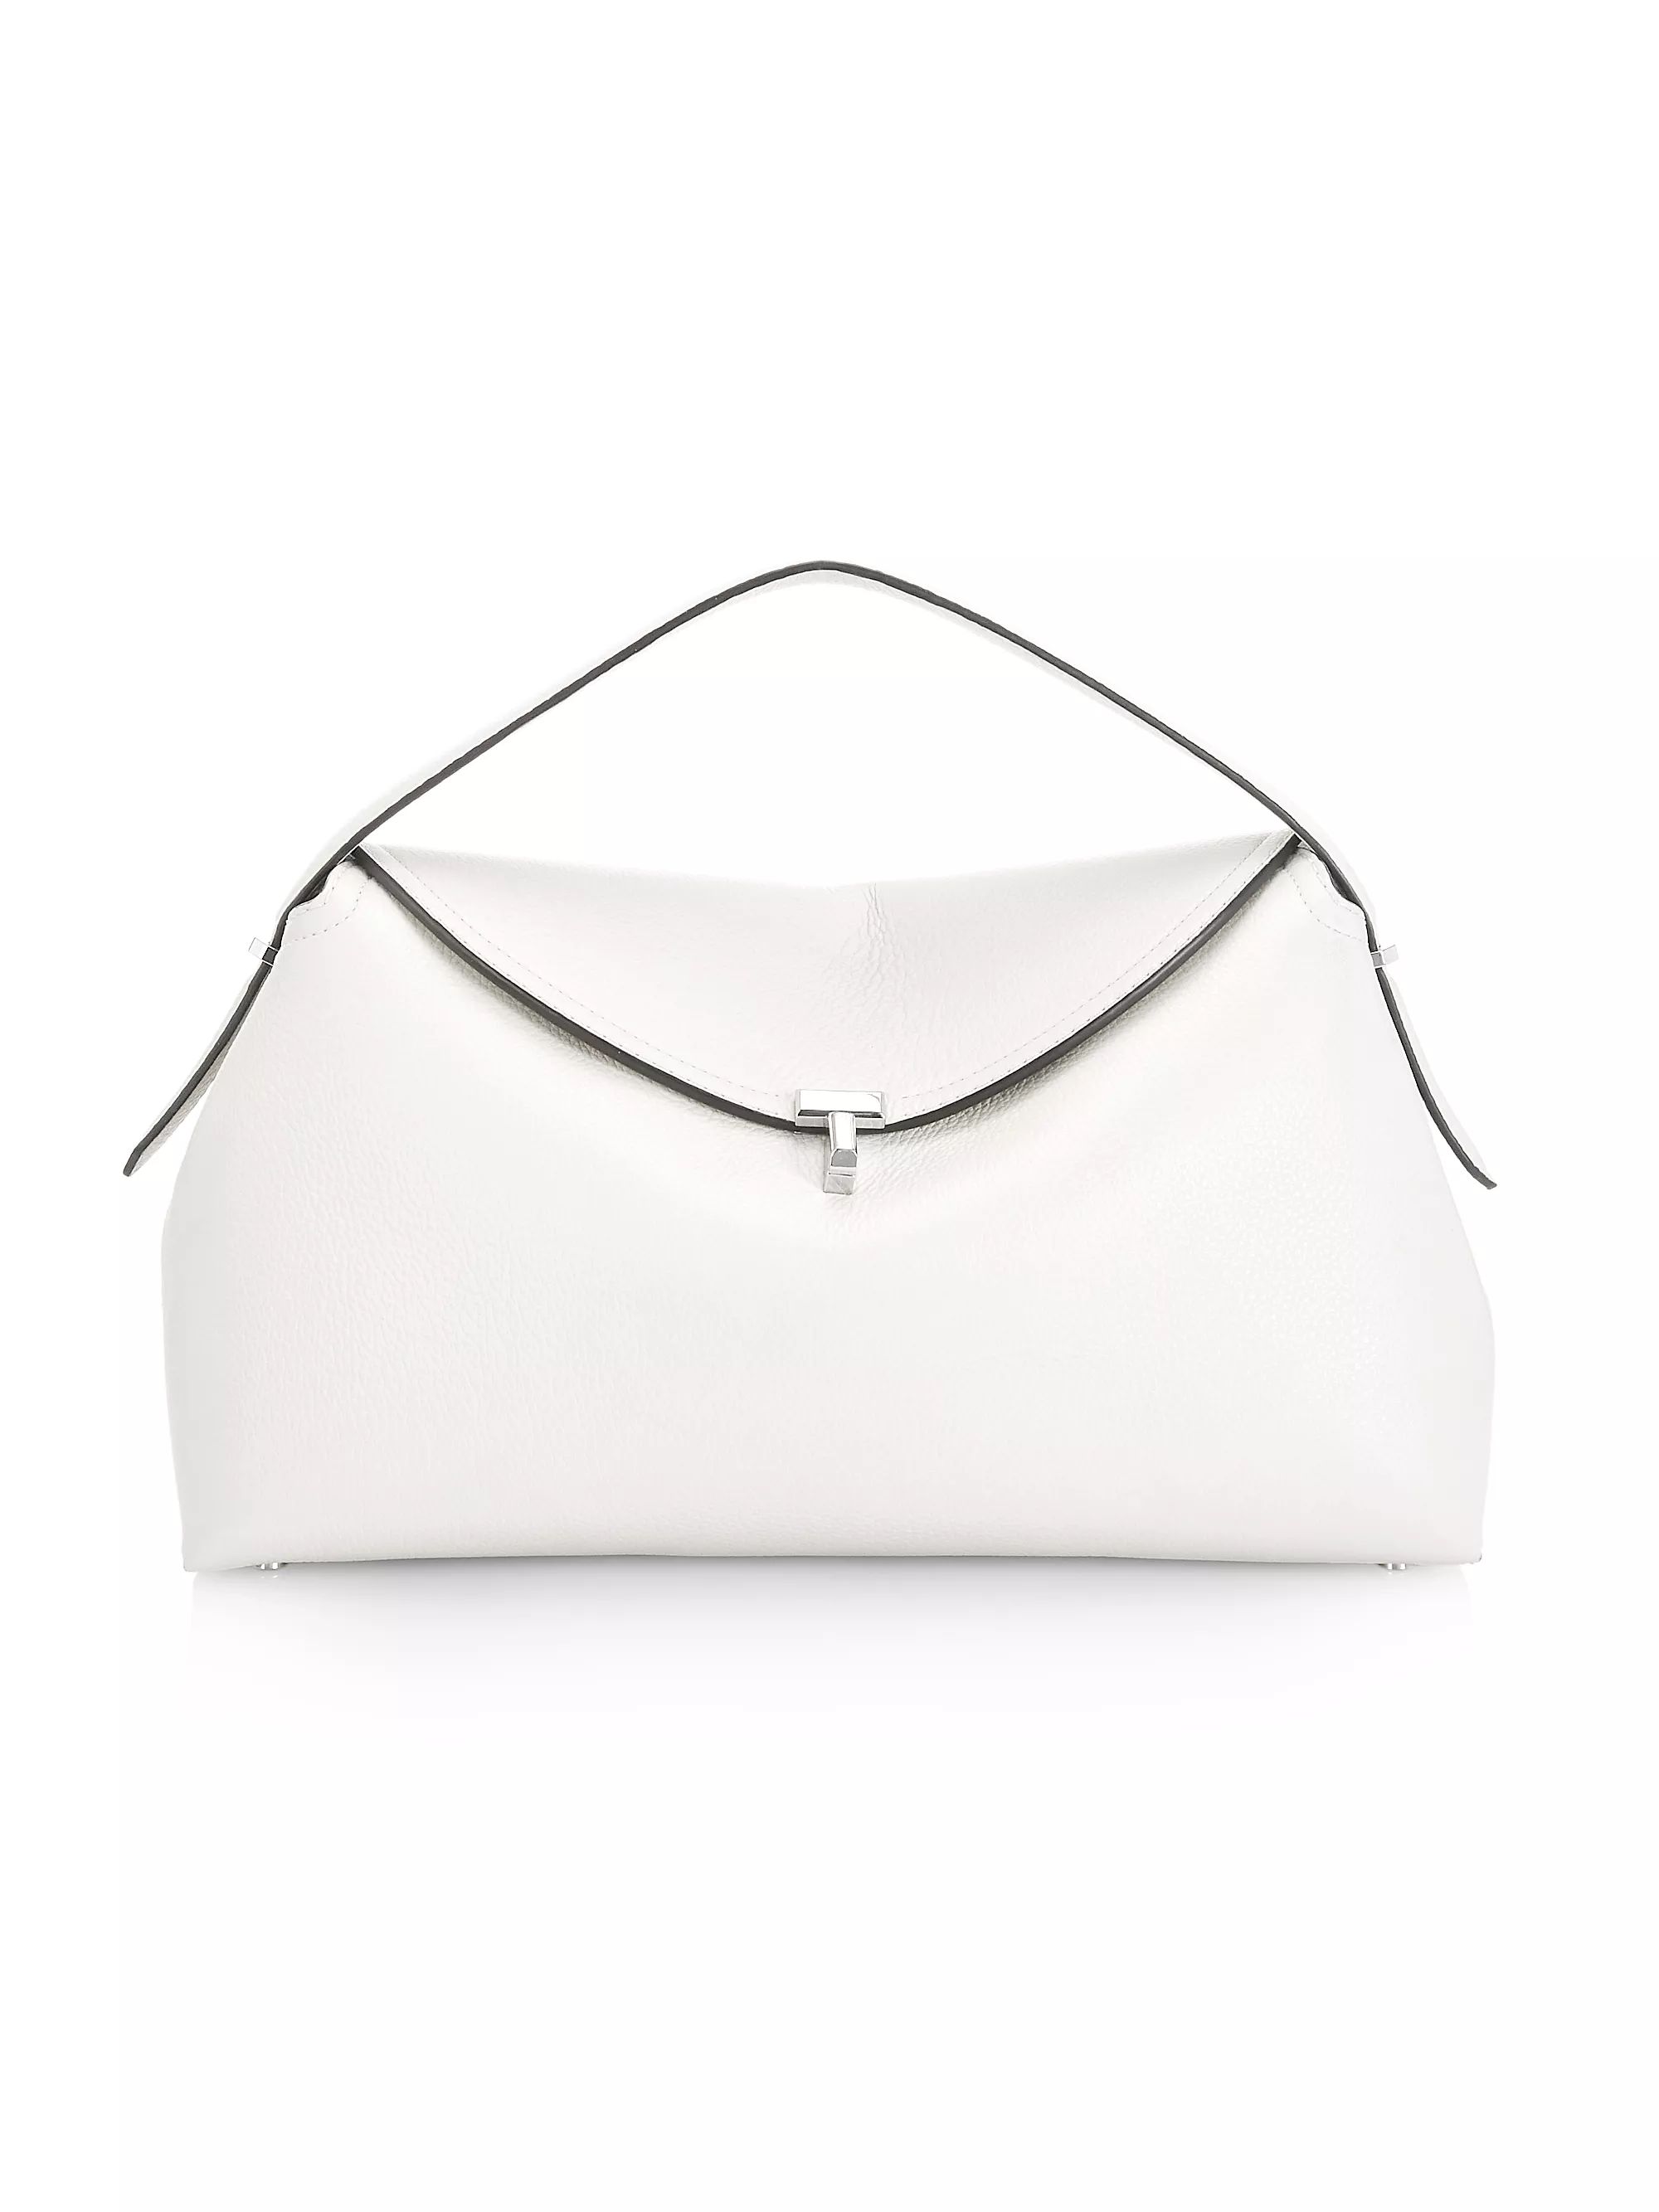 T-Lock Leather Top-Handle Bag | Saks Fifth Avenue